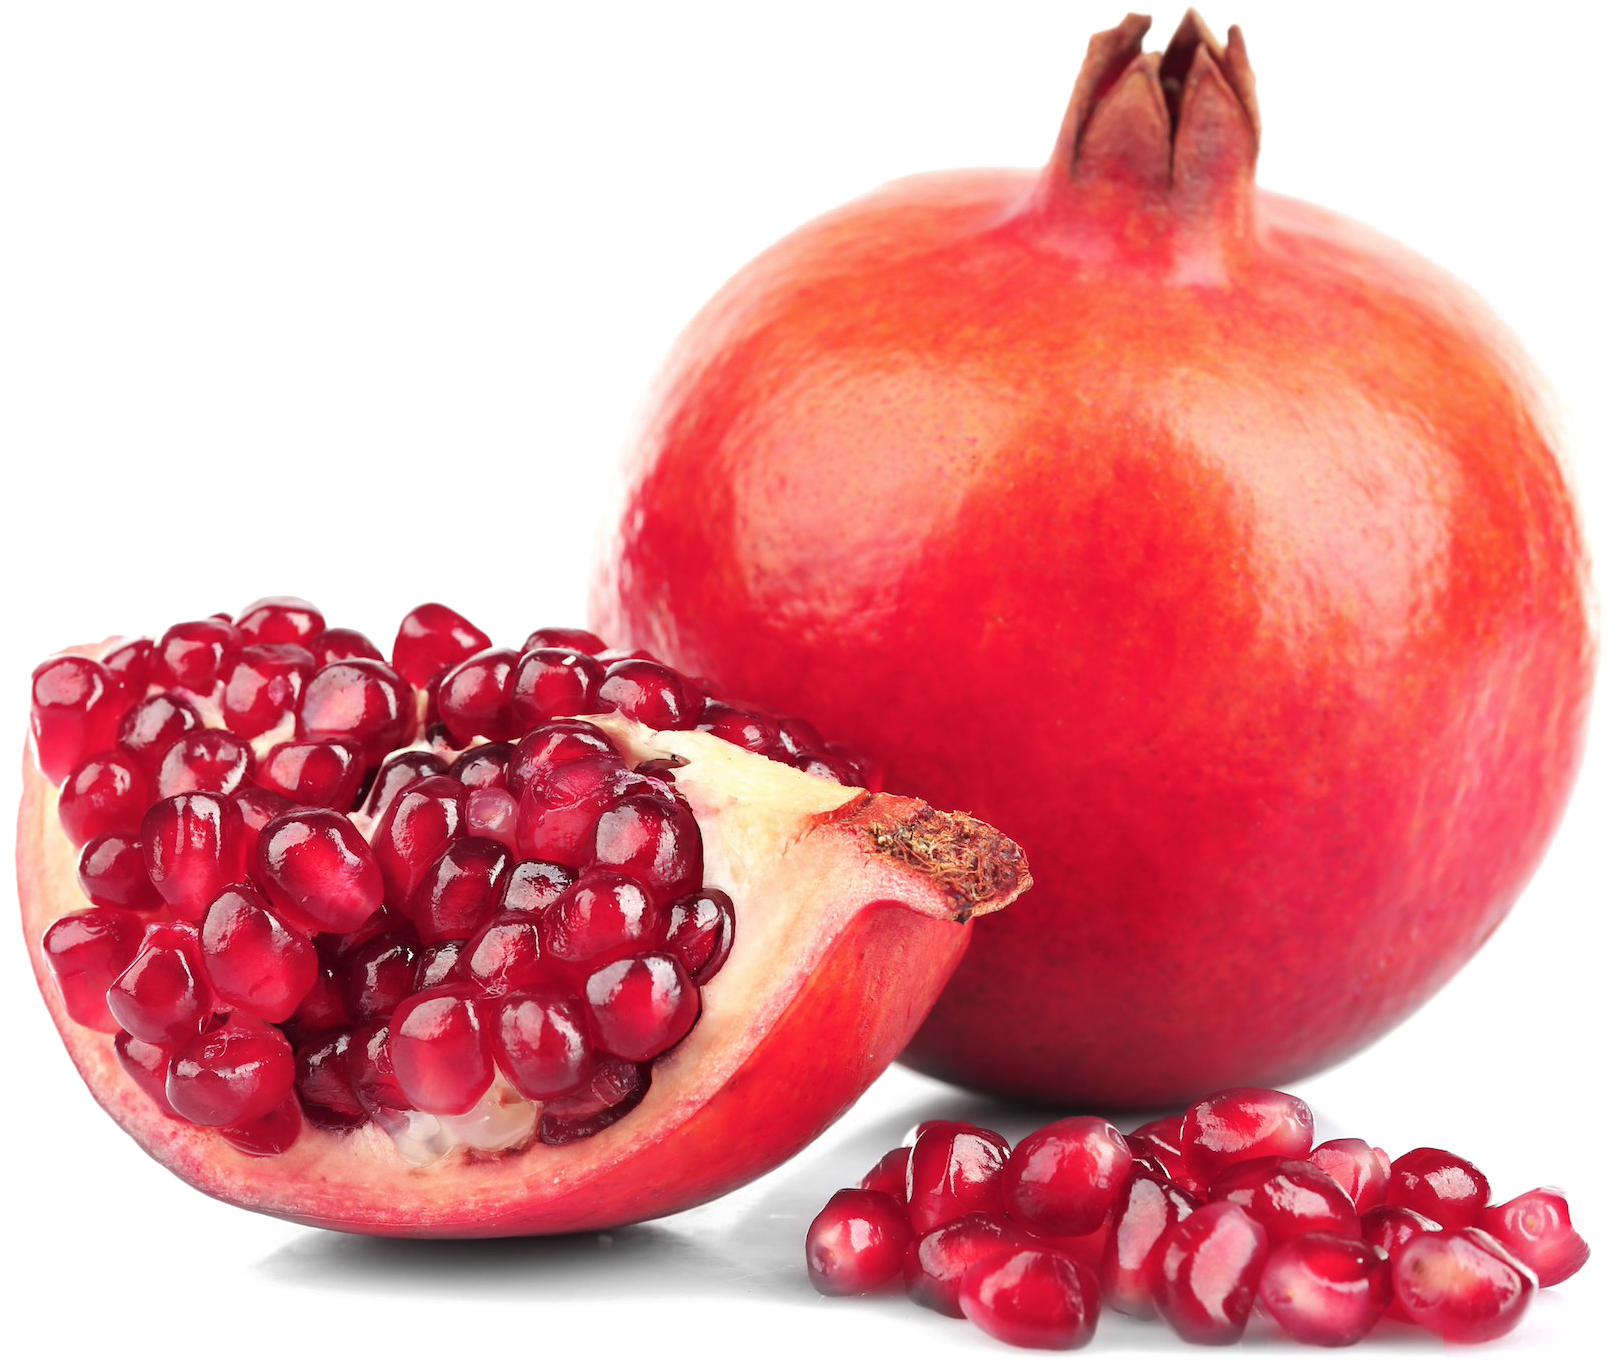 A Pomegranate And A Cut Open Pomegranate